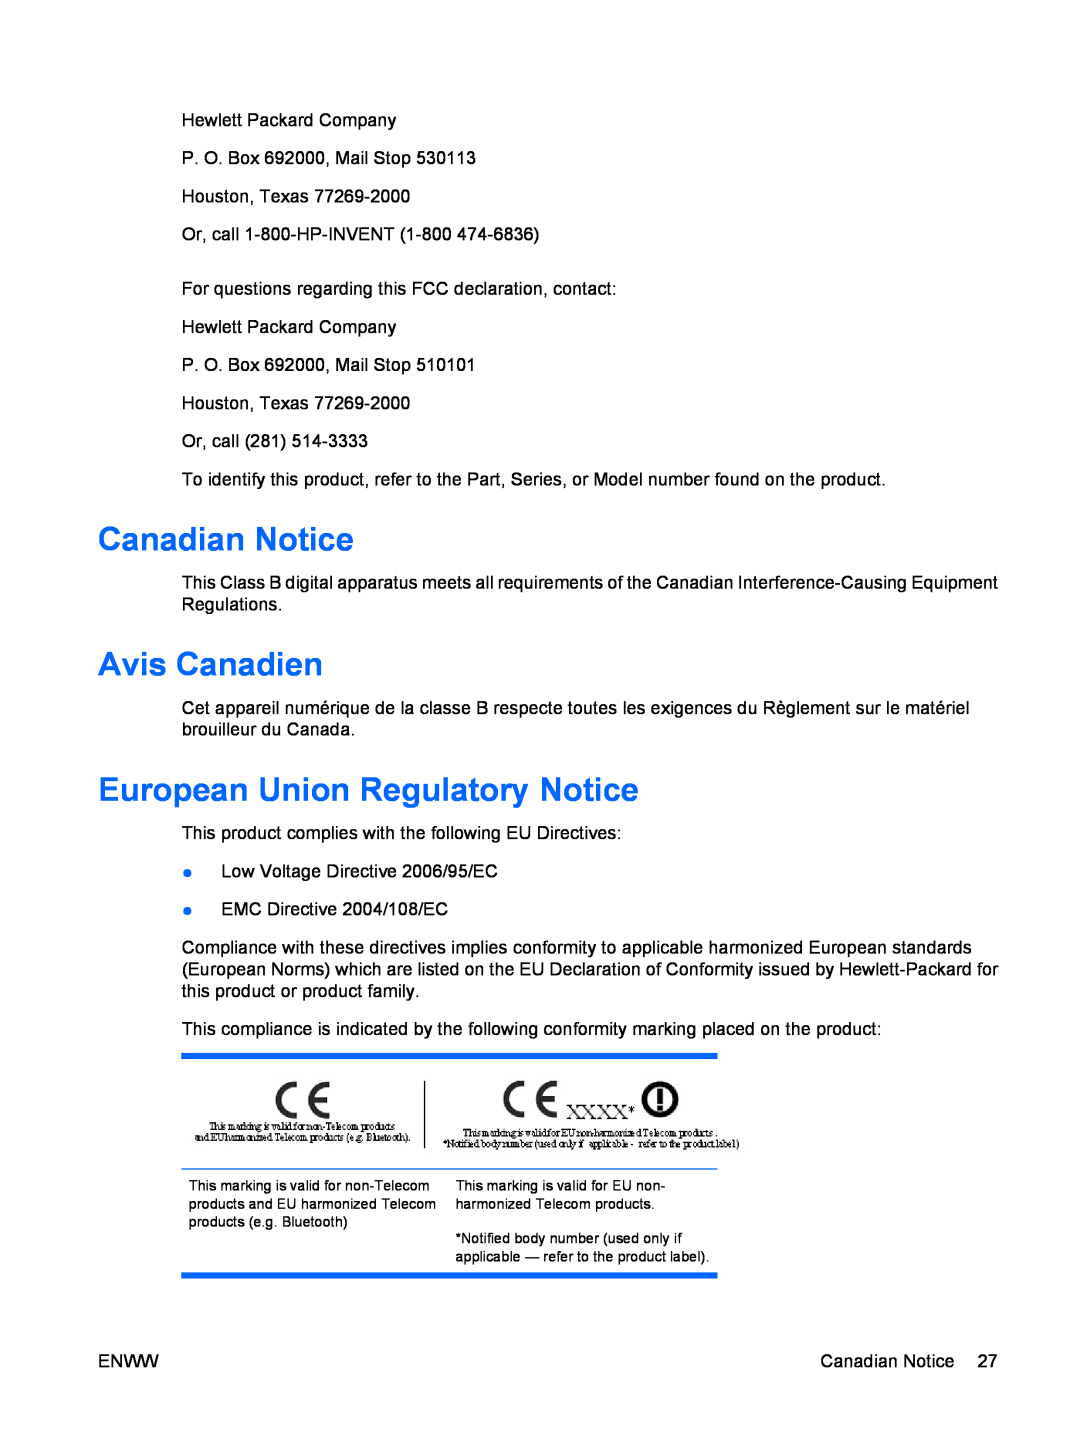 HP CQ1859E, CQ1859s manual Canadian Notice, Avis Canadien, European Union Regulatory Notice 